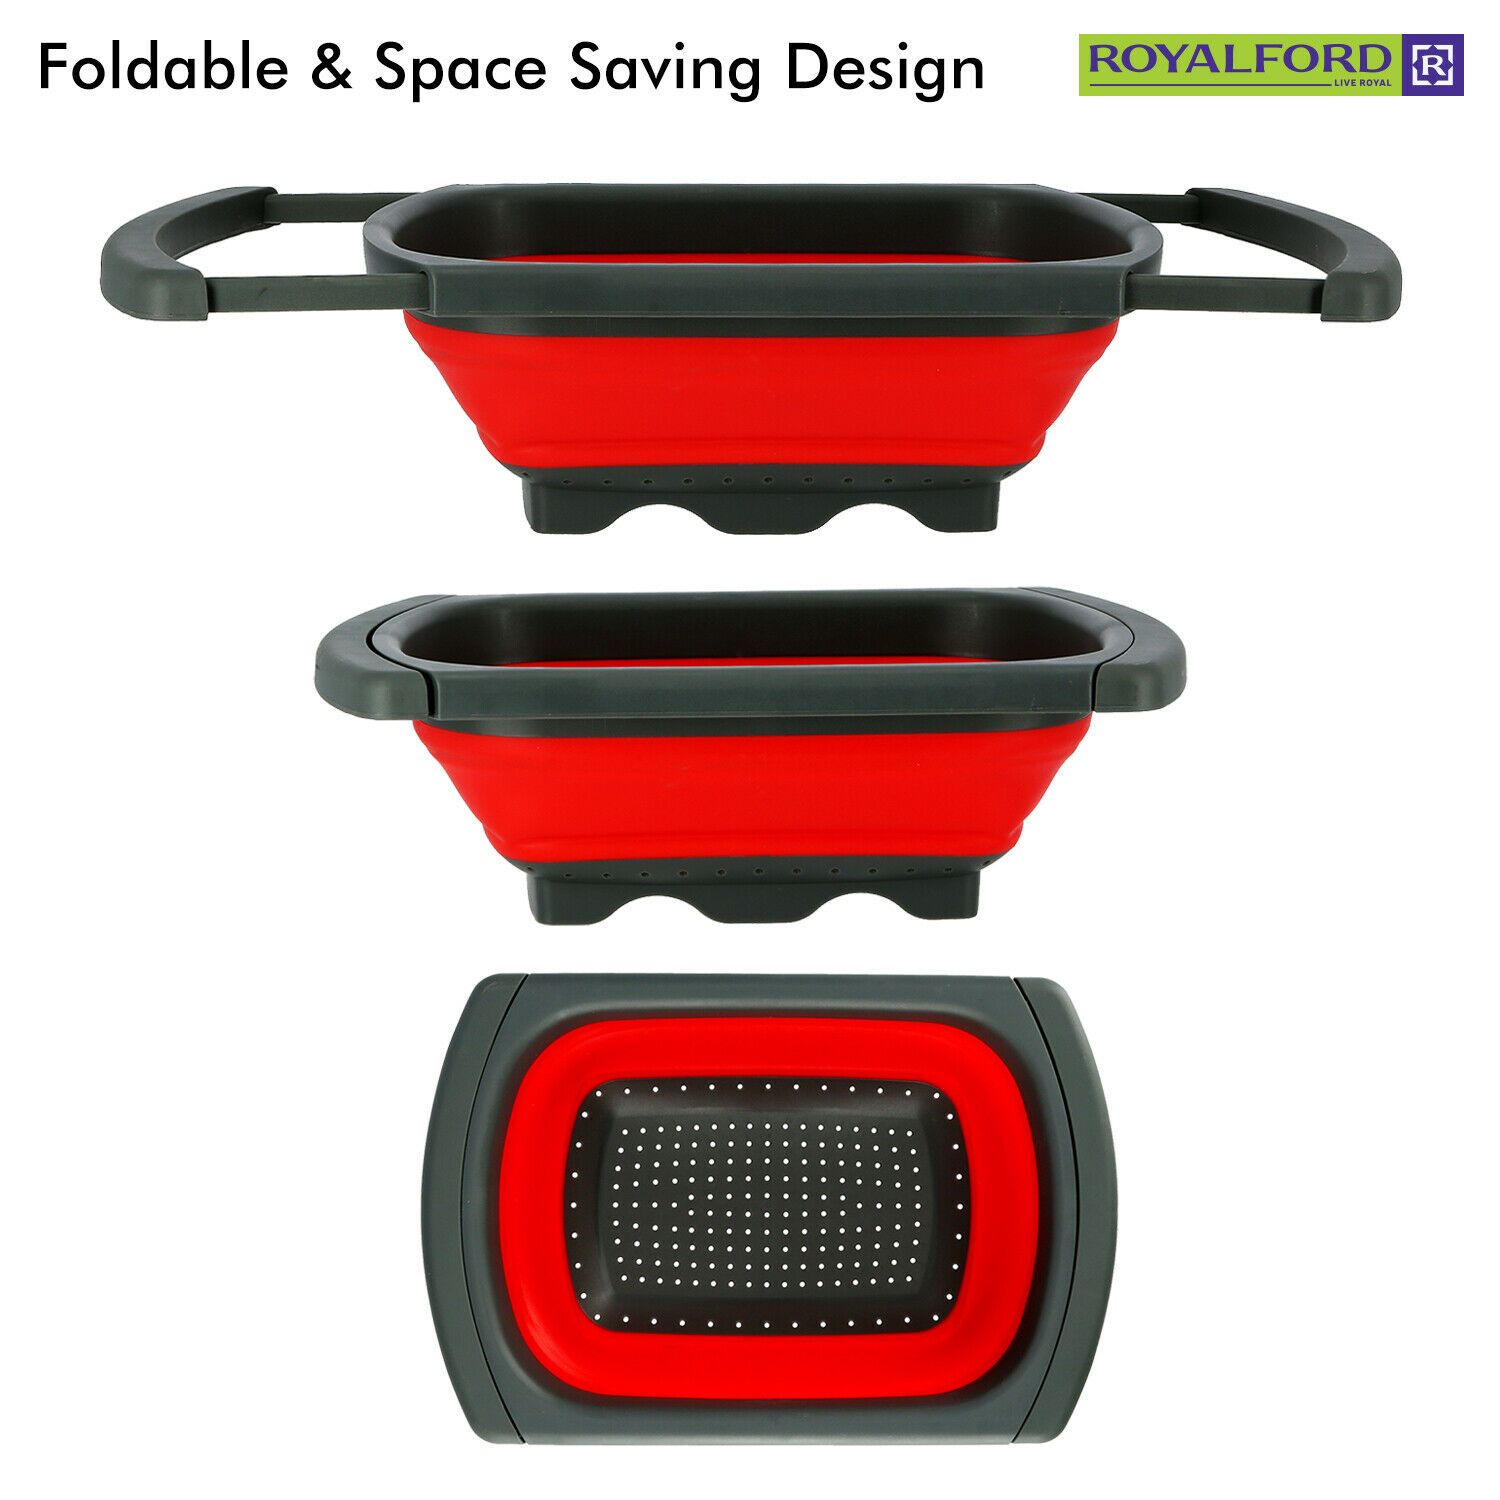 Royalford - Collapsible Folding Strainer Basket Royalford 